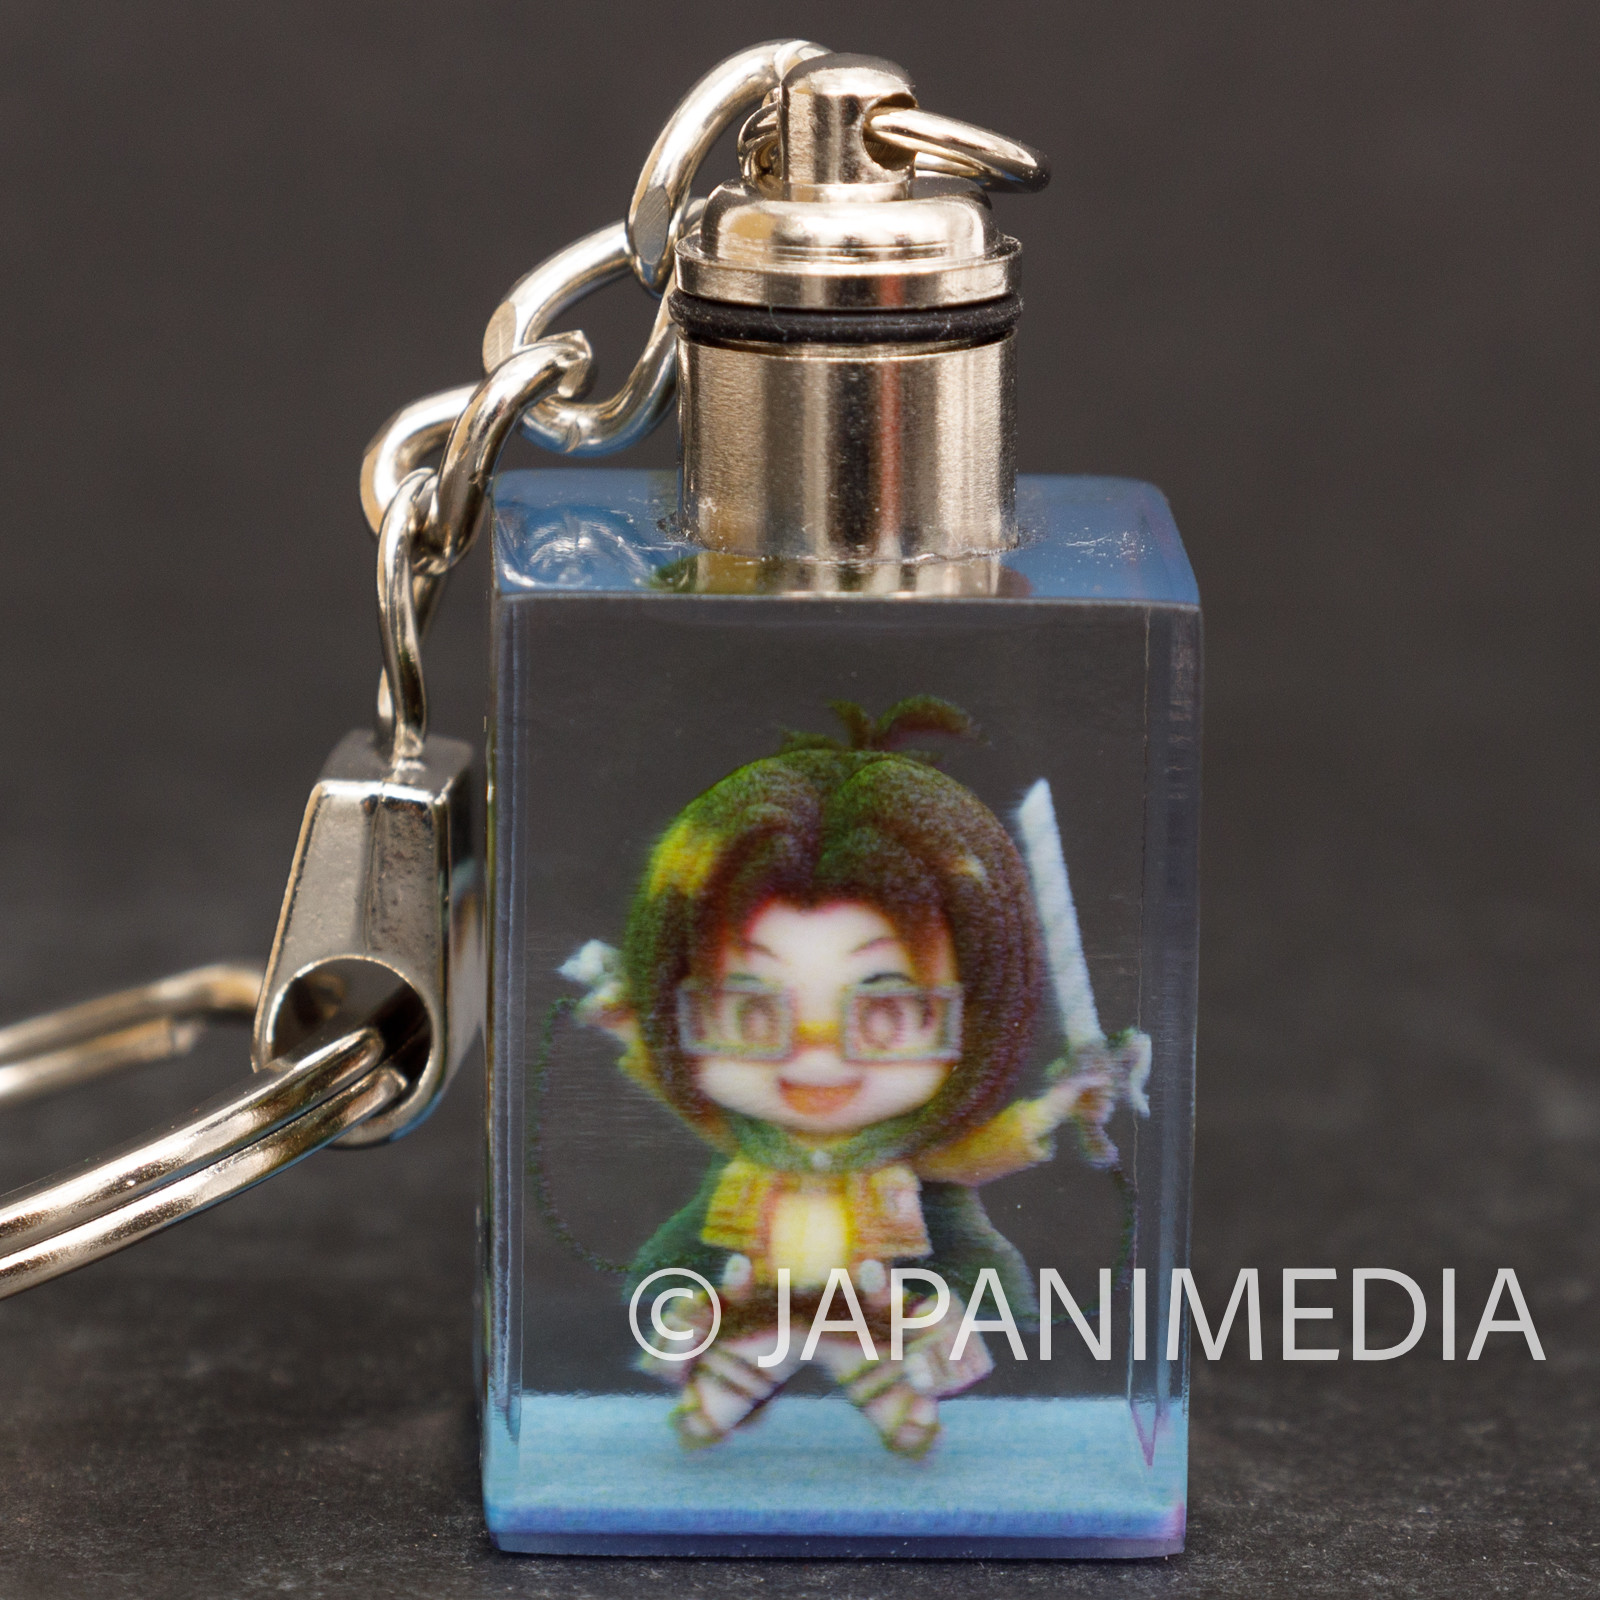 Attack on Titan Hange Zoe Mini Figure in Light up Cube Keychain JAPAN